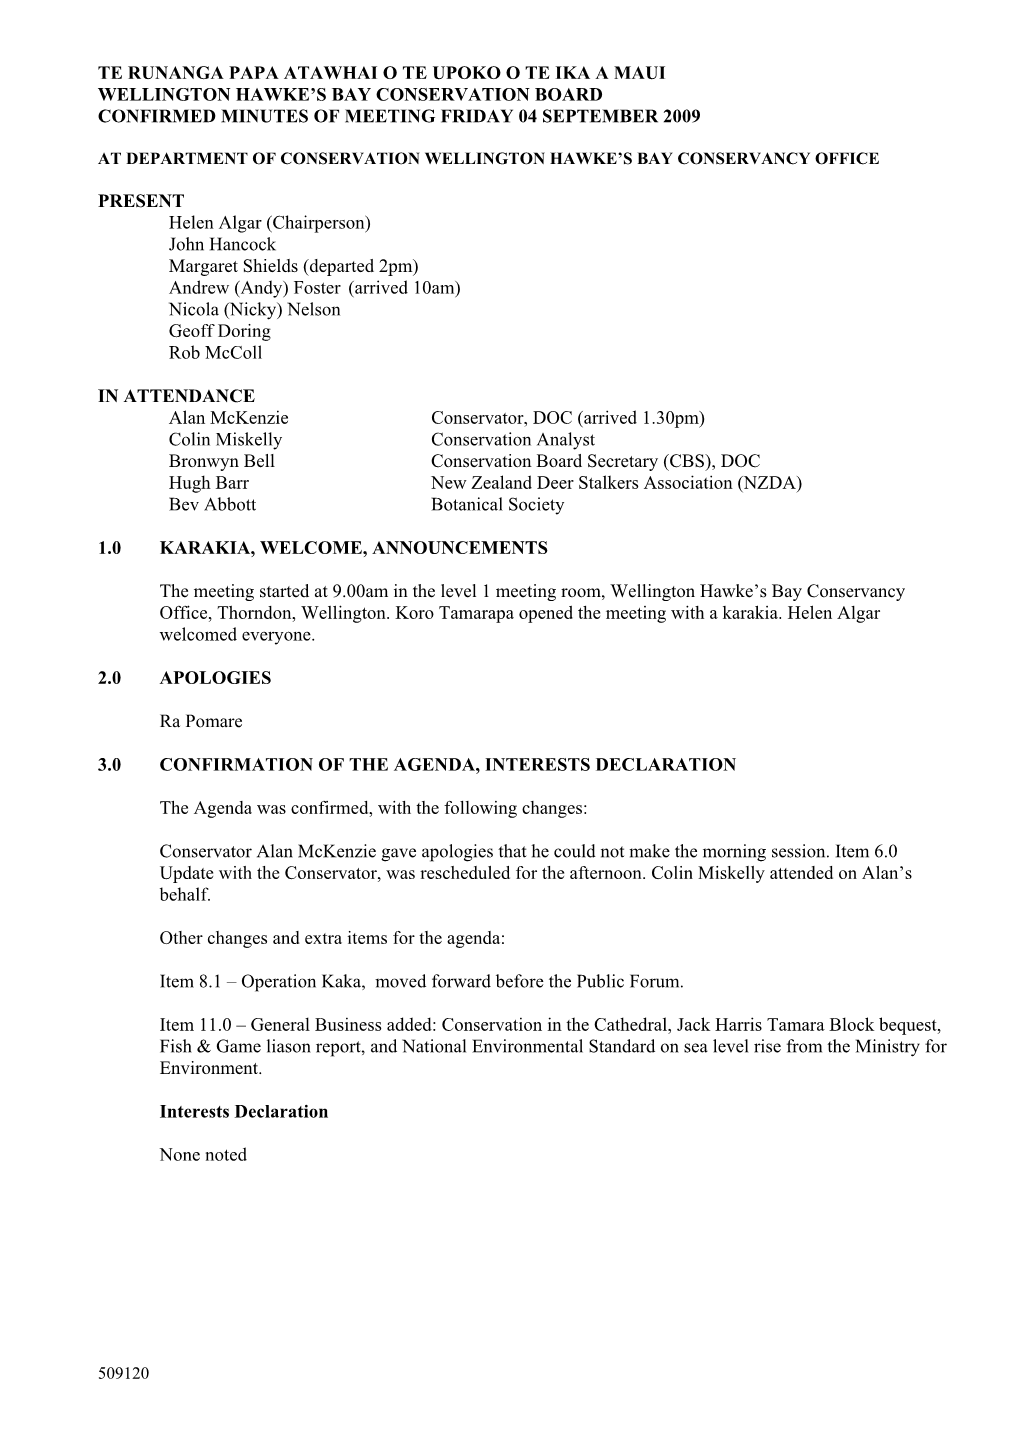 Wellington Hawke's Bay Conservation Board Minutes, Friday 4 September